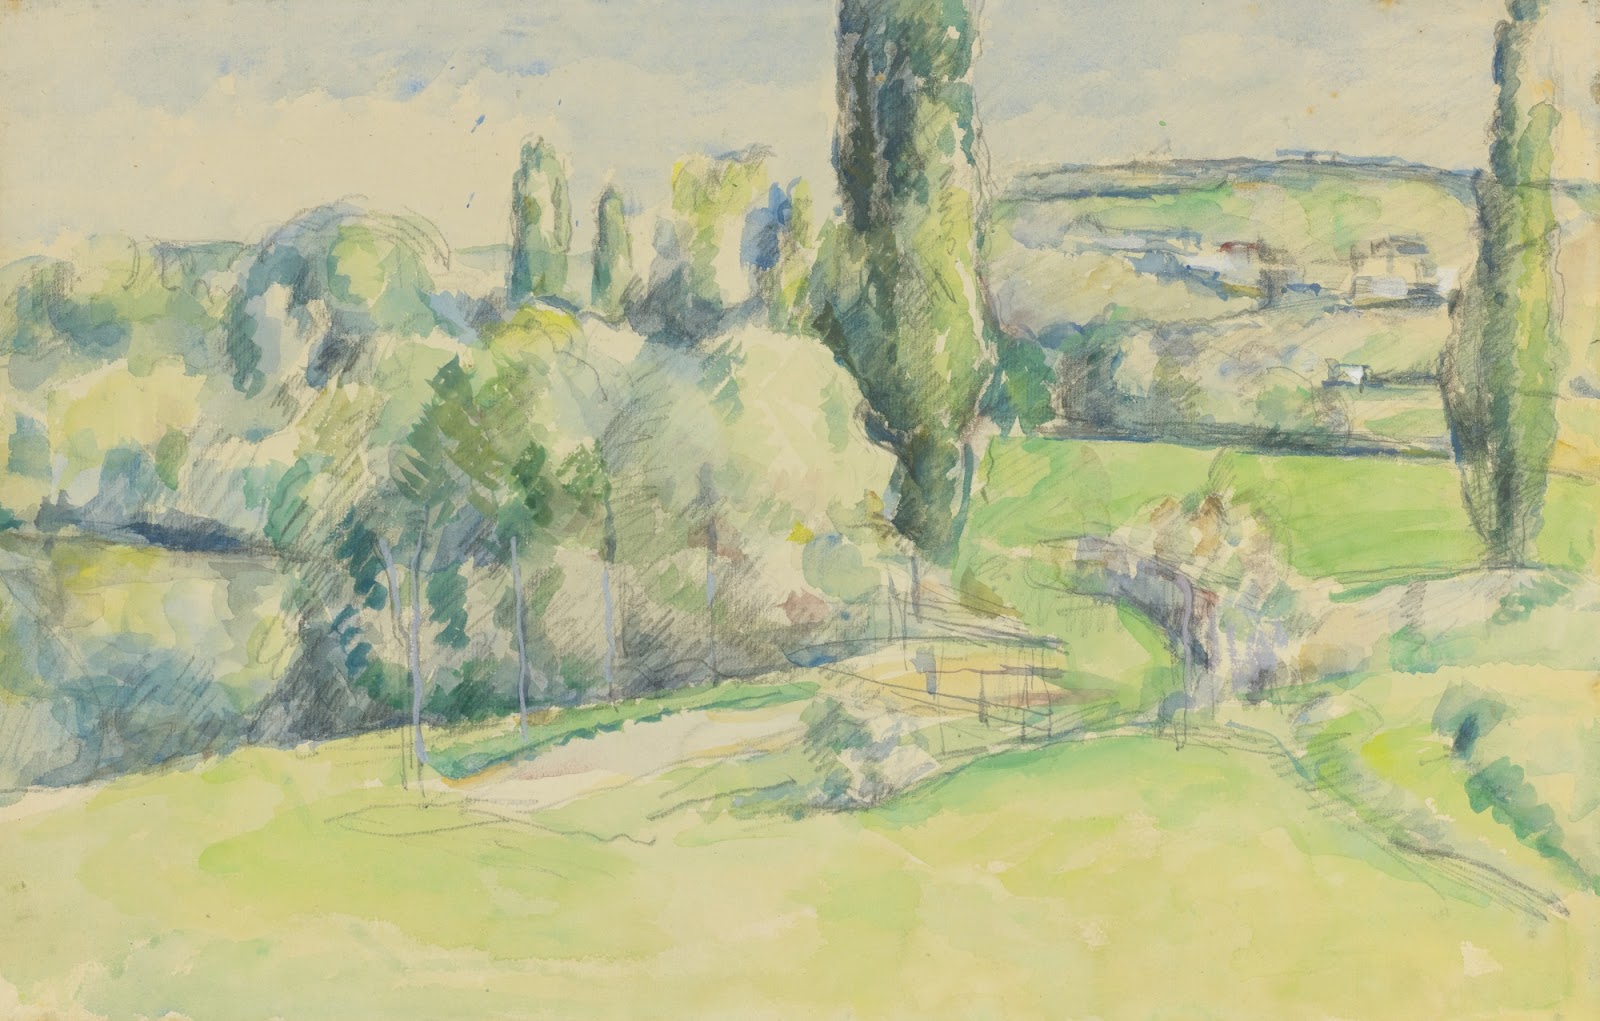 Paul+Cezanne-1839-1906 (181).jpg